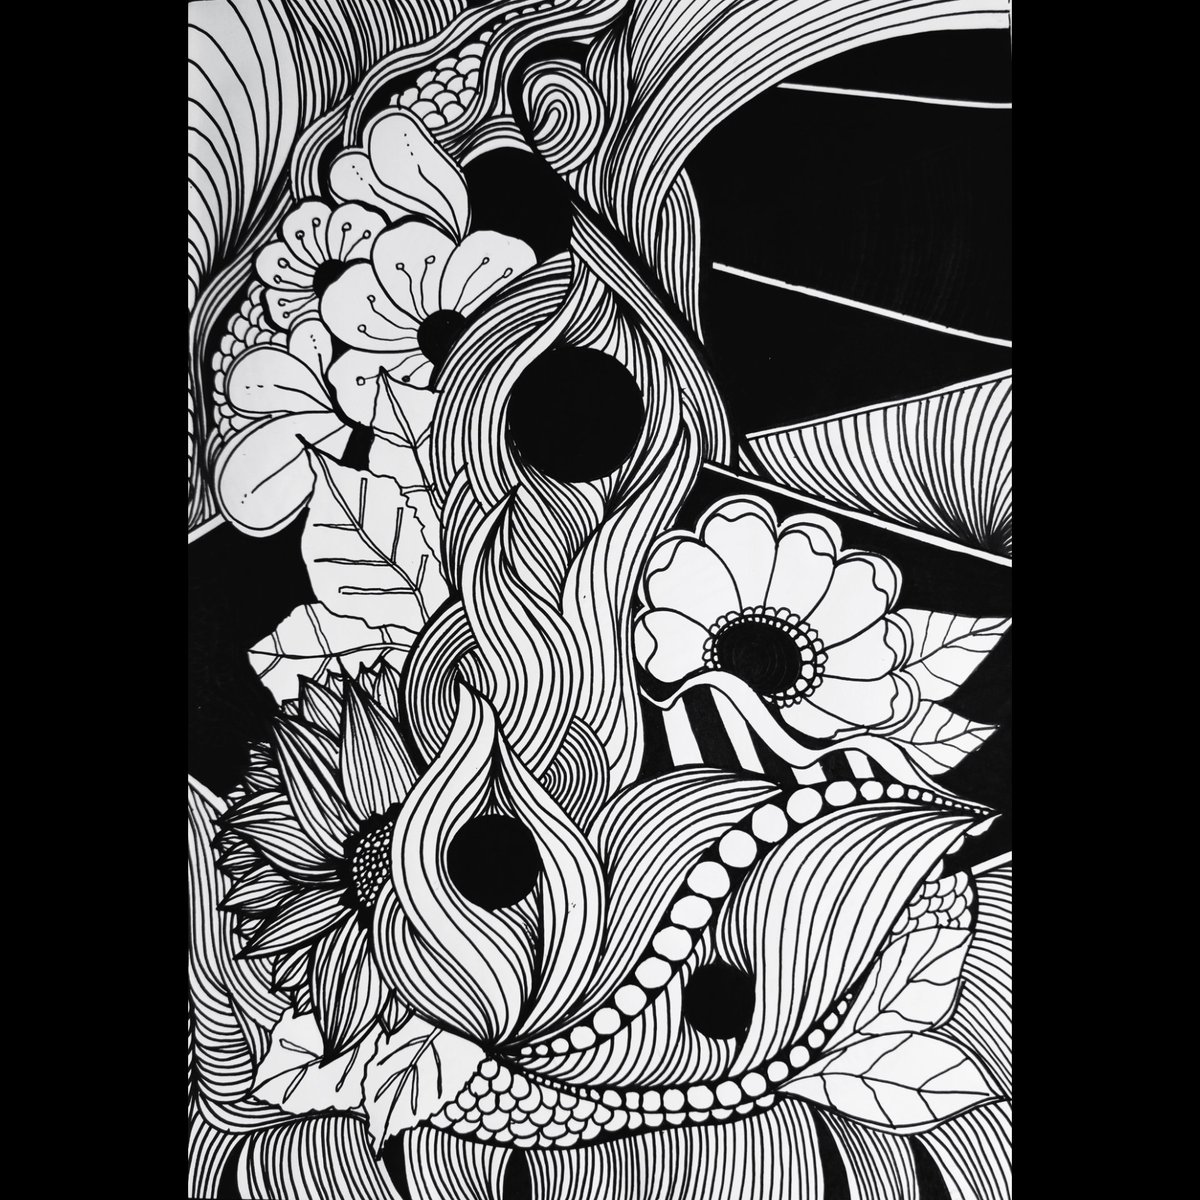 #zenartfeatures #lineloversgarden #inkyliner #floralarthub #linedrawingart #doodledrawing #botanicallinedrawings #floralillustrations #dailydrawings #inkonpaperdrawing #inkonpaper #inkillustrations
instagram.com/p/CF7-dafDFYF/…